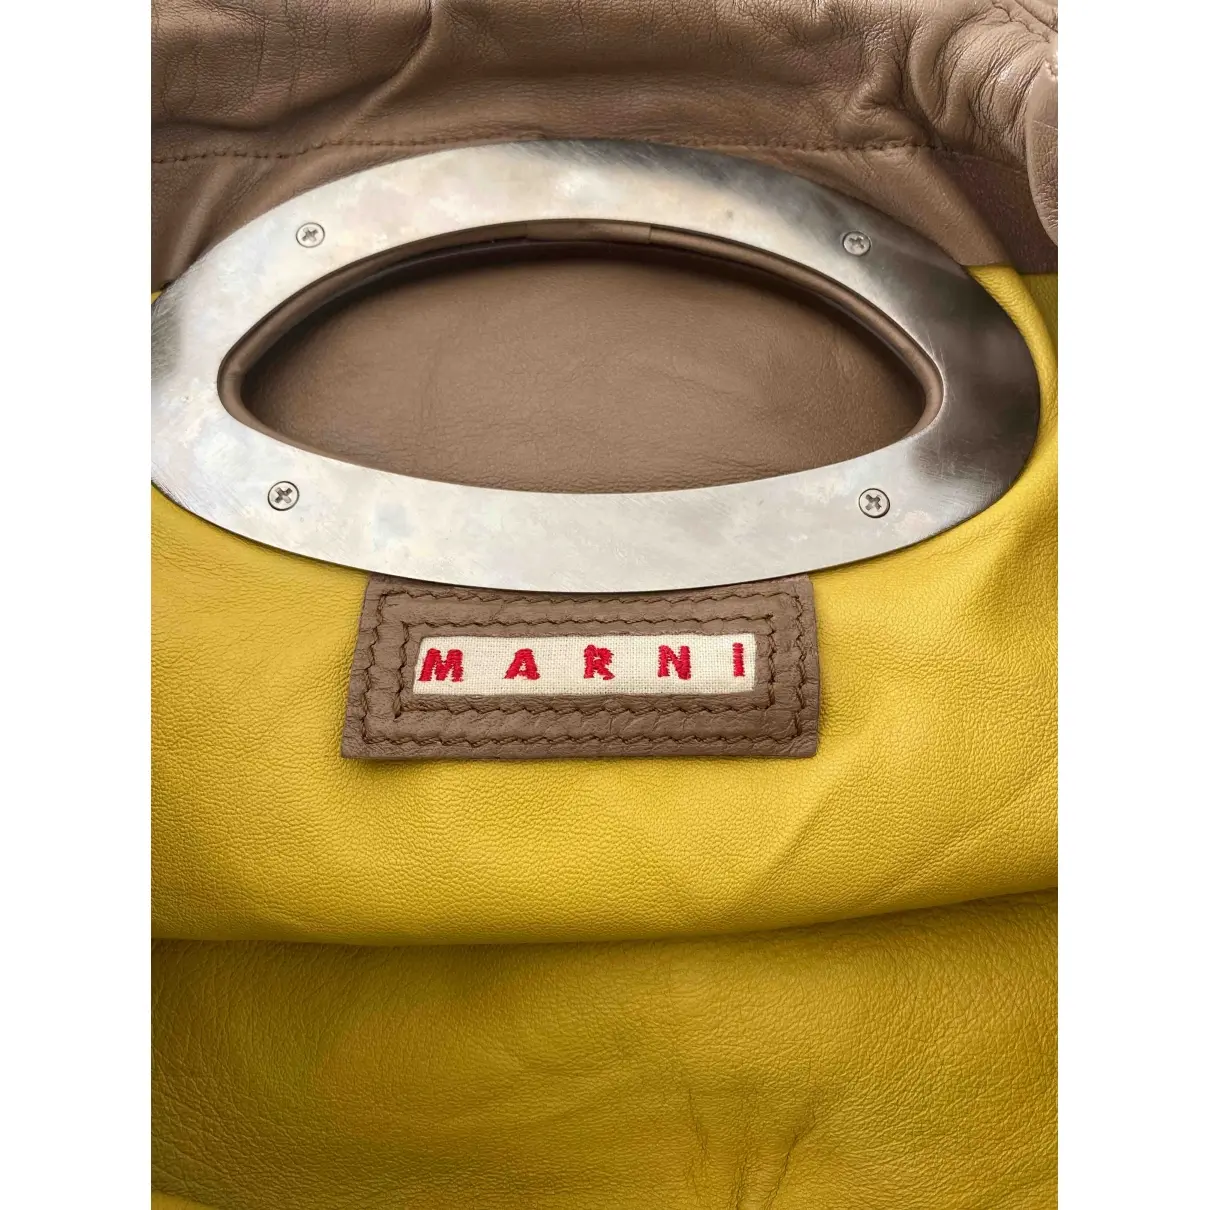 Buy Marni Leather bag online